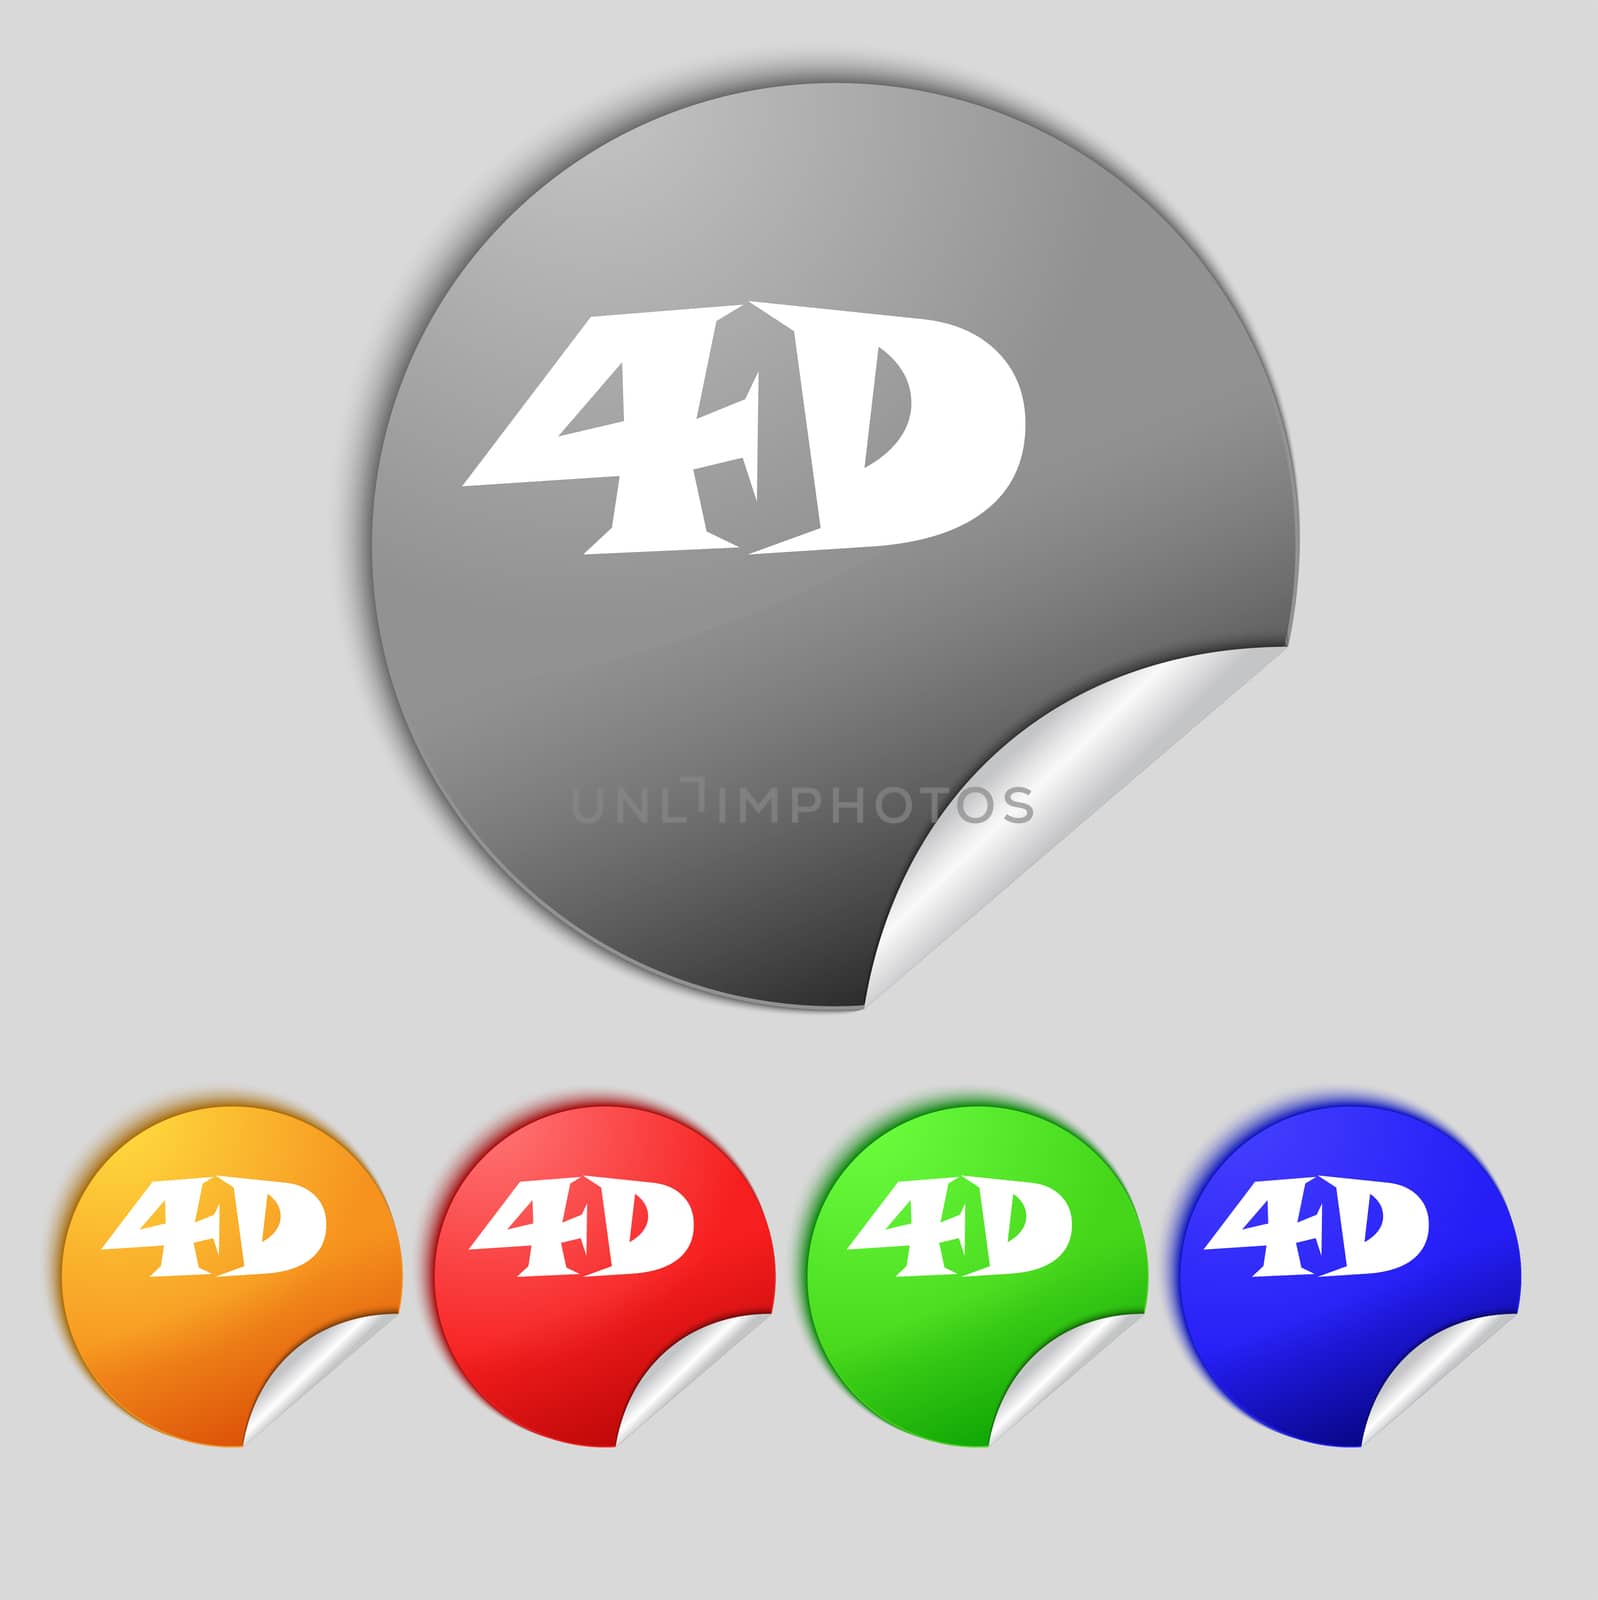 4D sign icon. 4D New technology symbol. Set of colour buttons. illustration